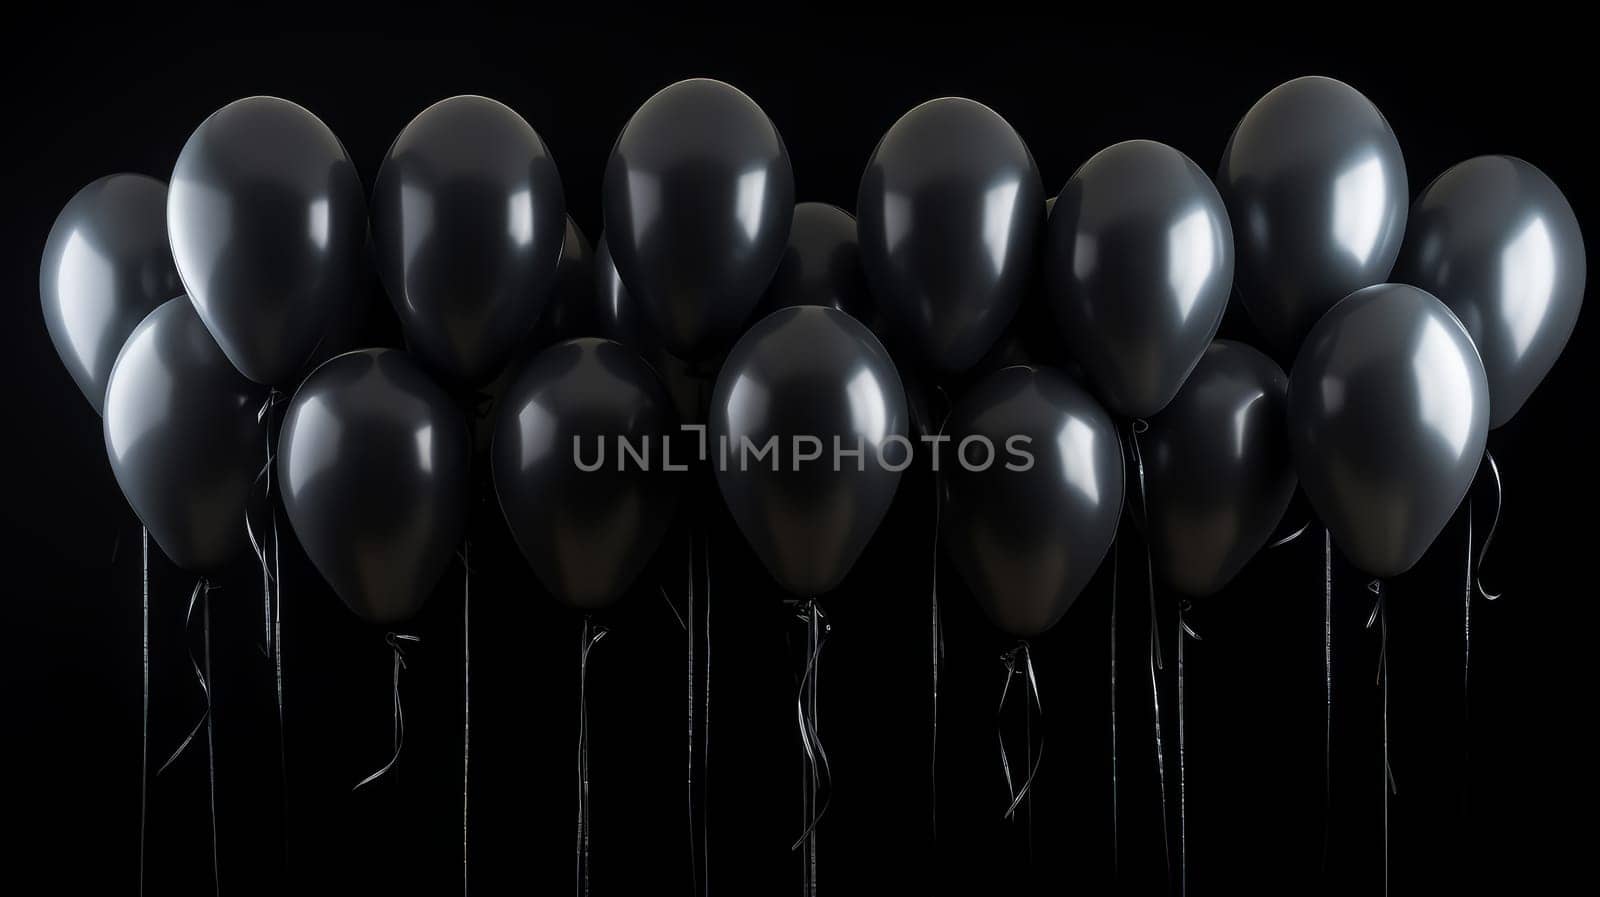 Black balloons on dark background on the day of sales black Friday by Alla_Yurtayeva